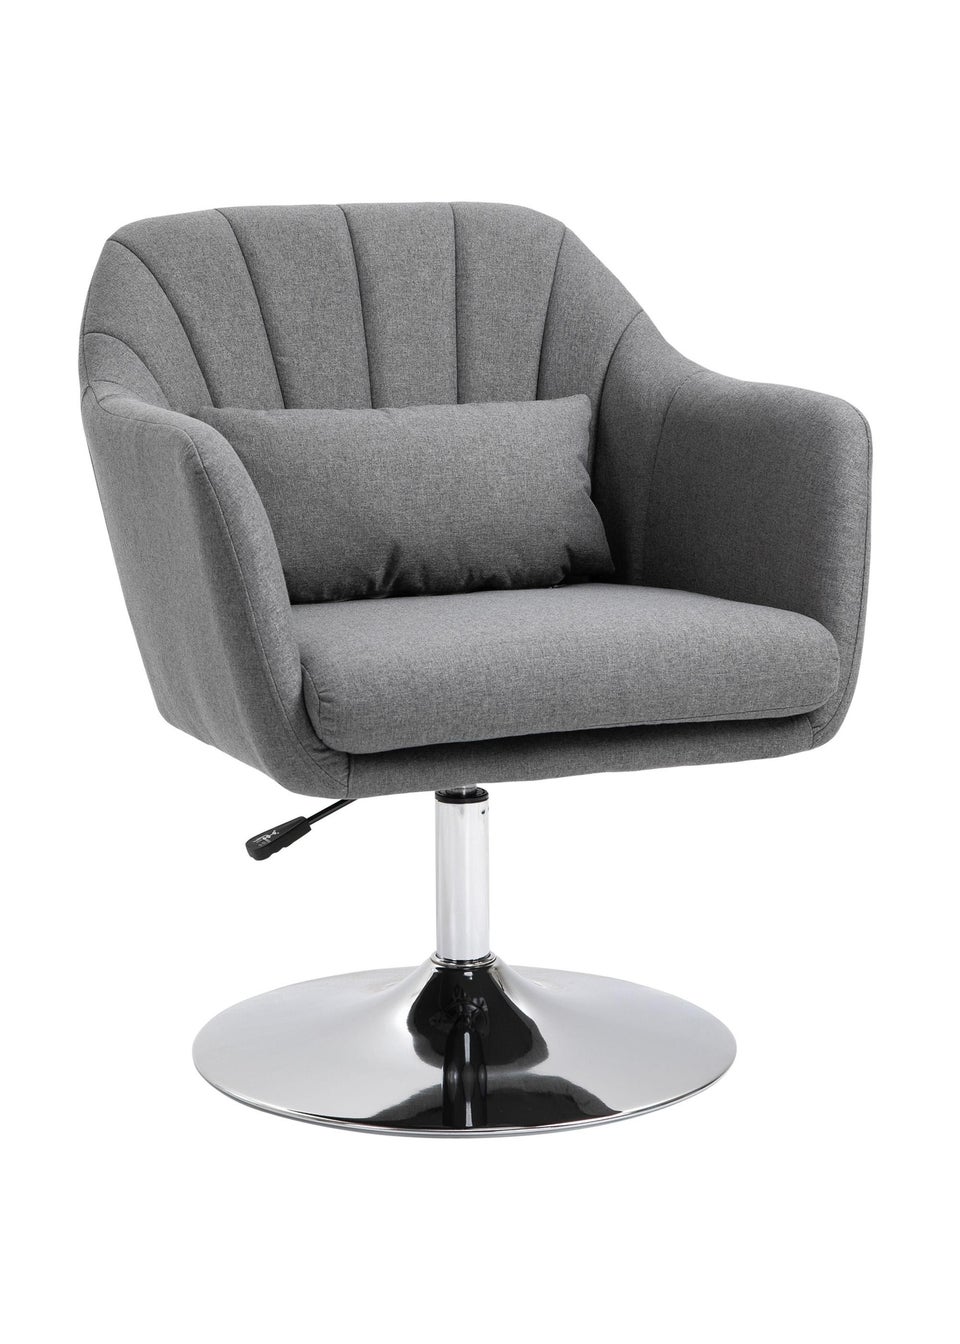 HOMCOM Grey Stylish Retro Linen Swivel Tub Chair (60cm x 60cm x 91cm)